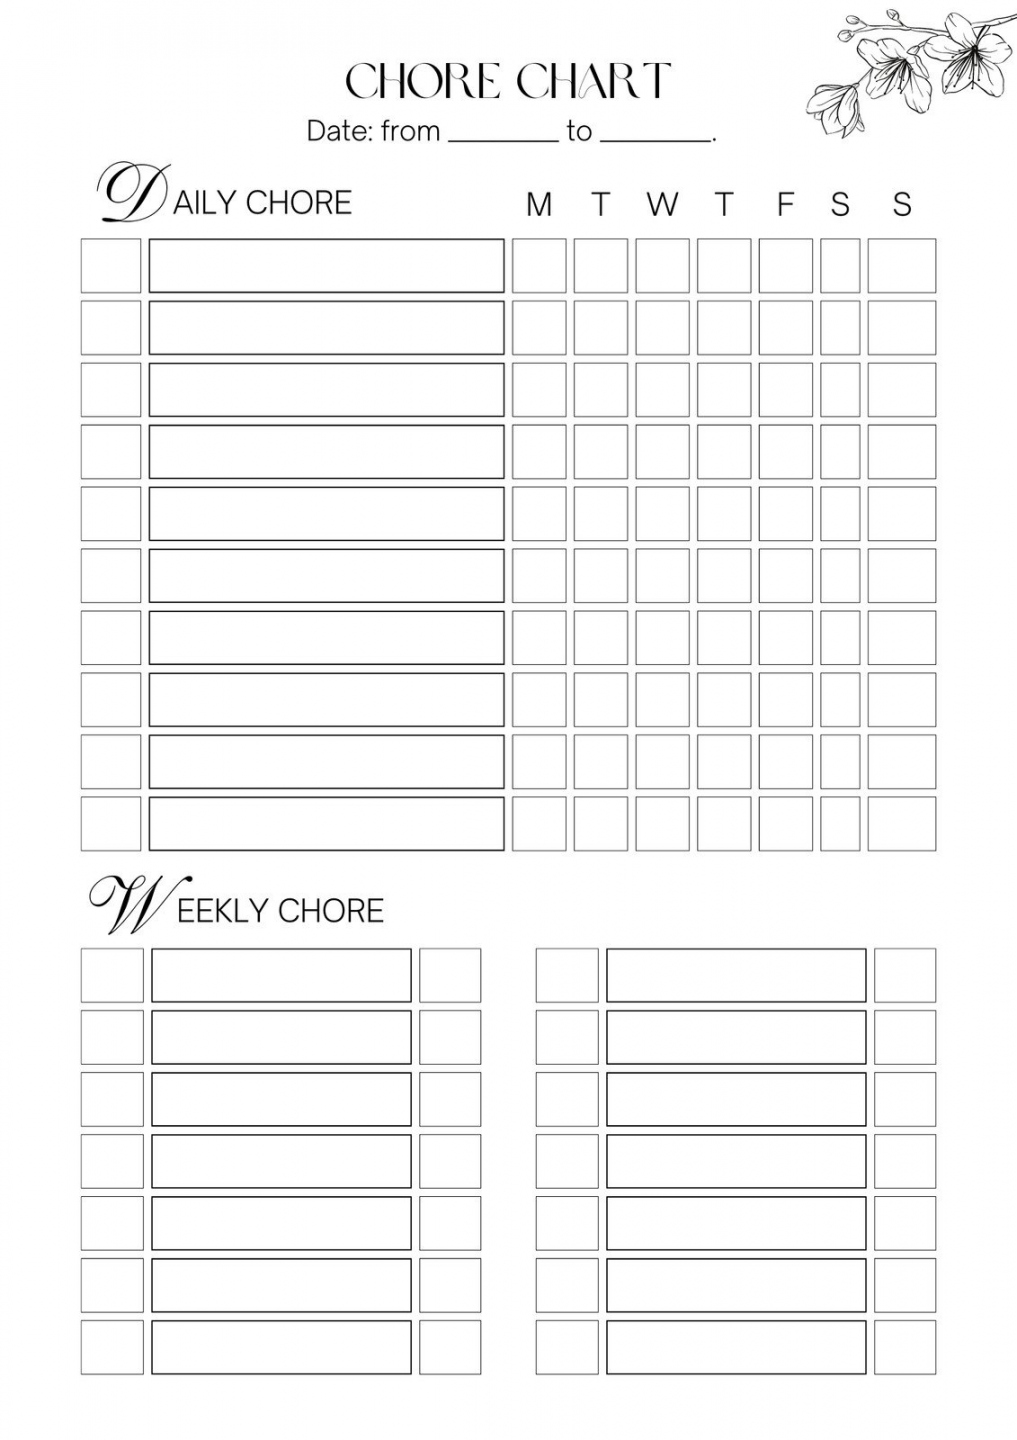 Chore Chart Printable Free - Printable - Free customizable chore chart templates to print  Canva